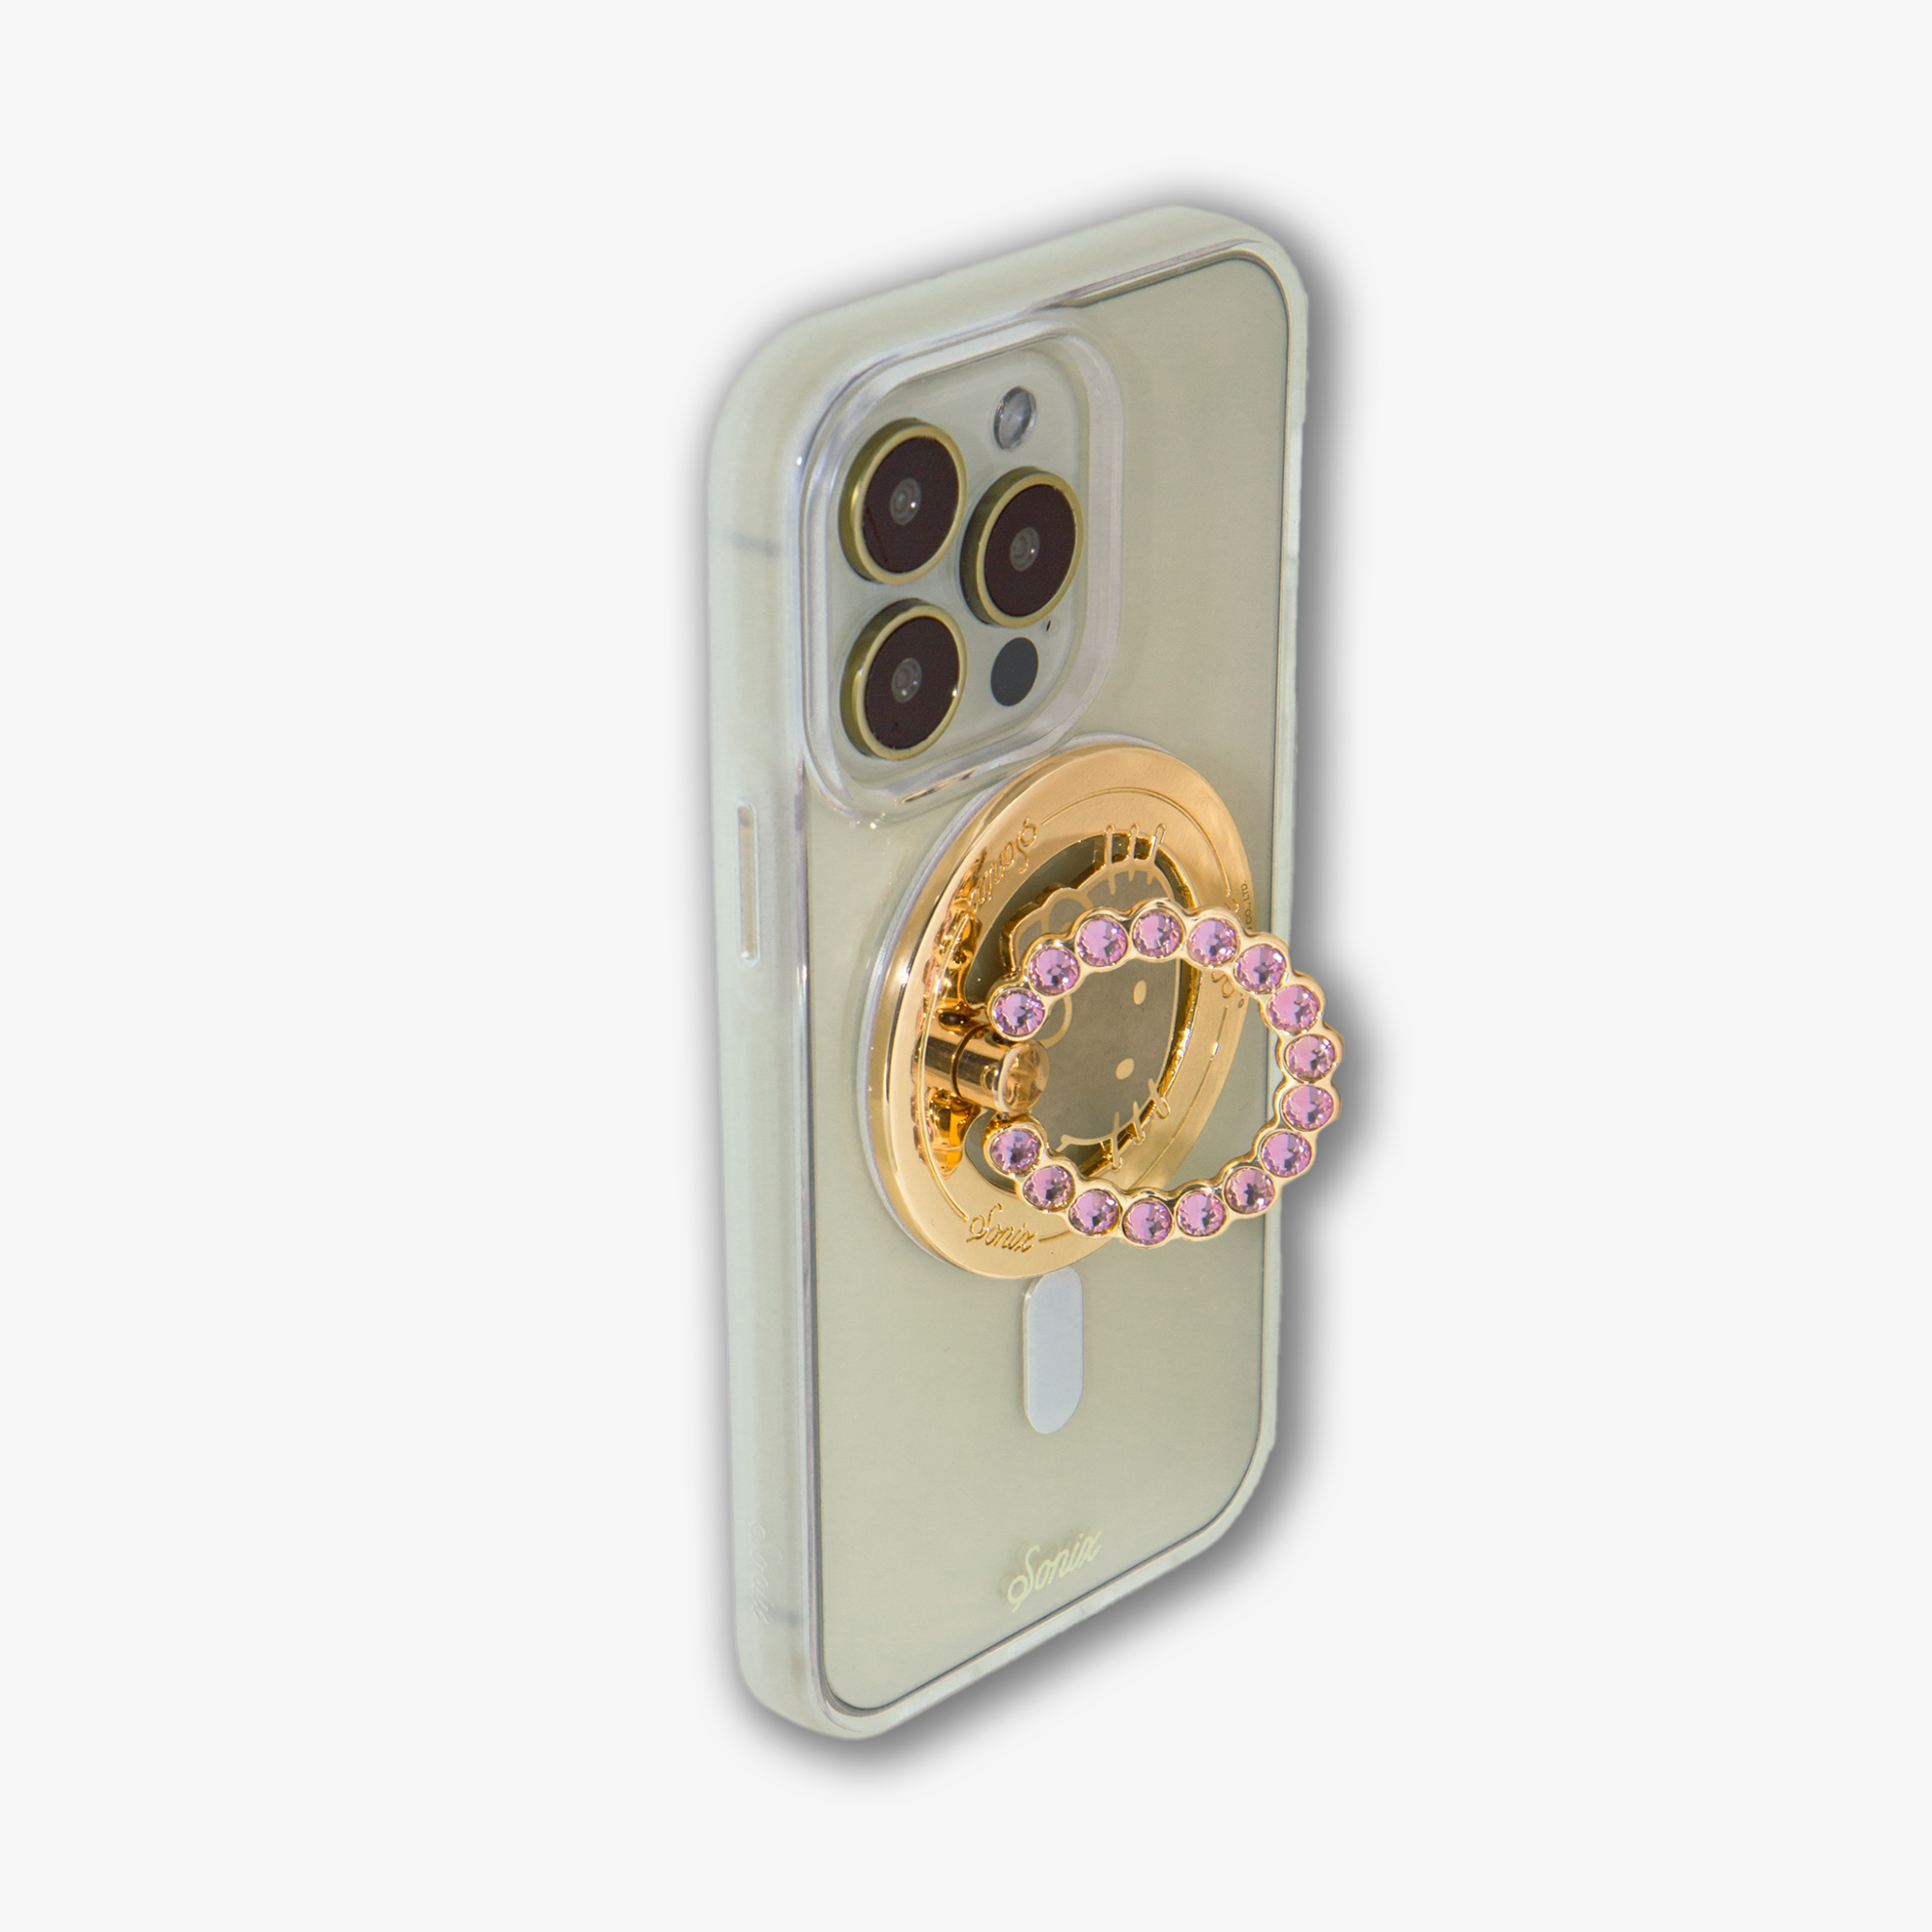 Hello Kitty x Sonix Phone Ring Accessory BySonix Inc.   